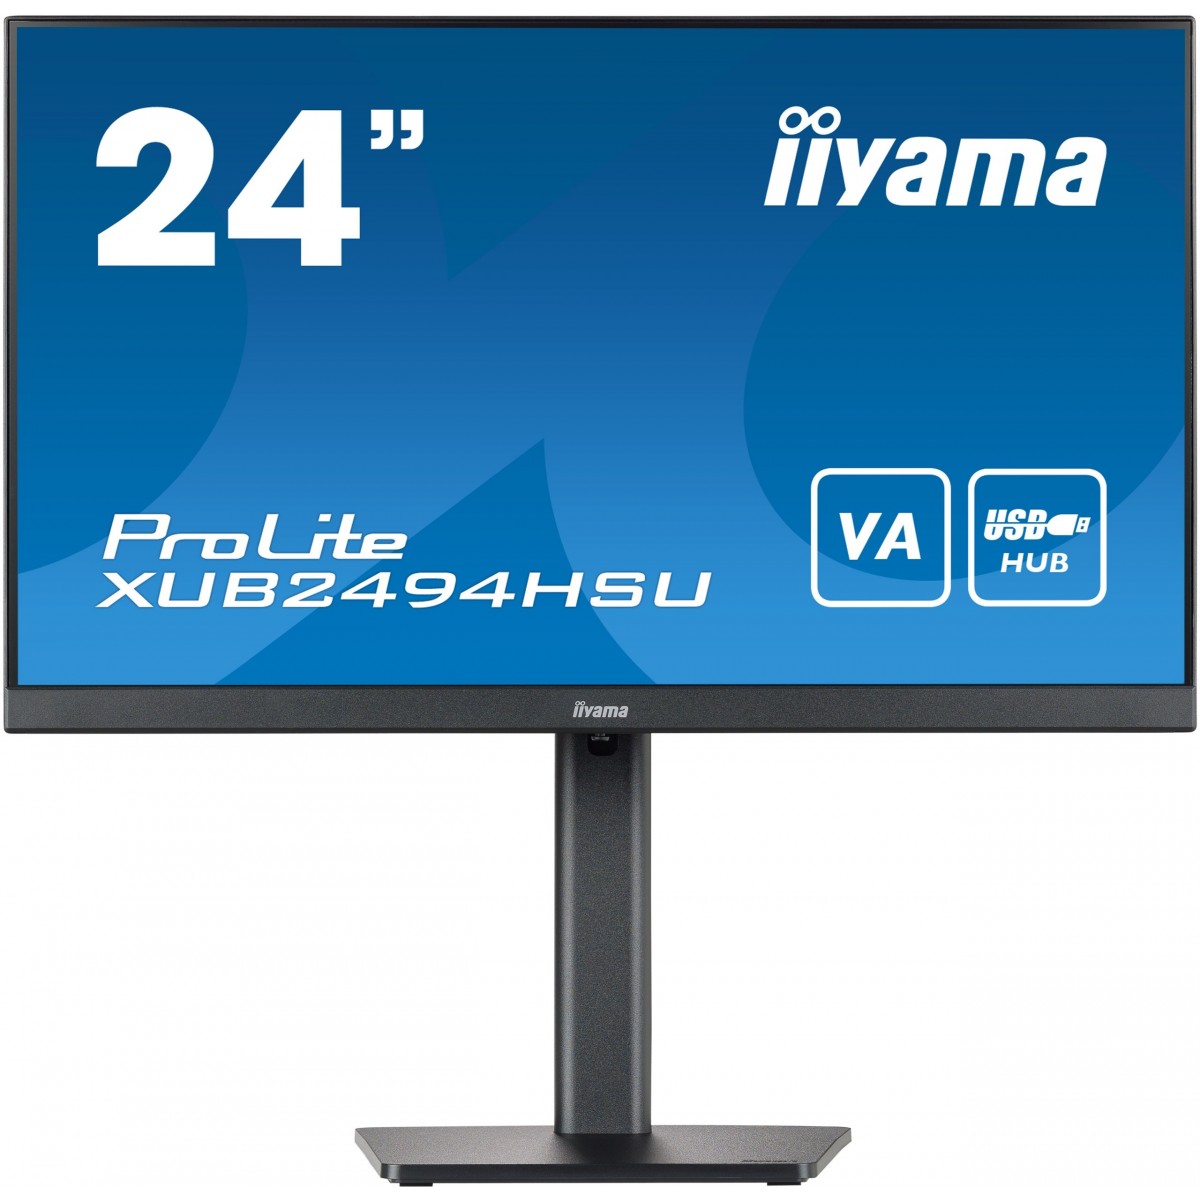 Iiyama 24i ETE VA-panel 1920x1080 15cm height adj. Stand - Flat Screen